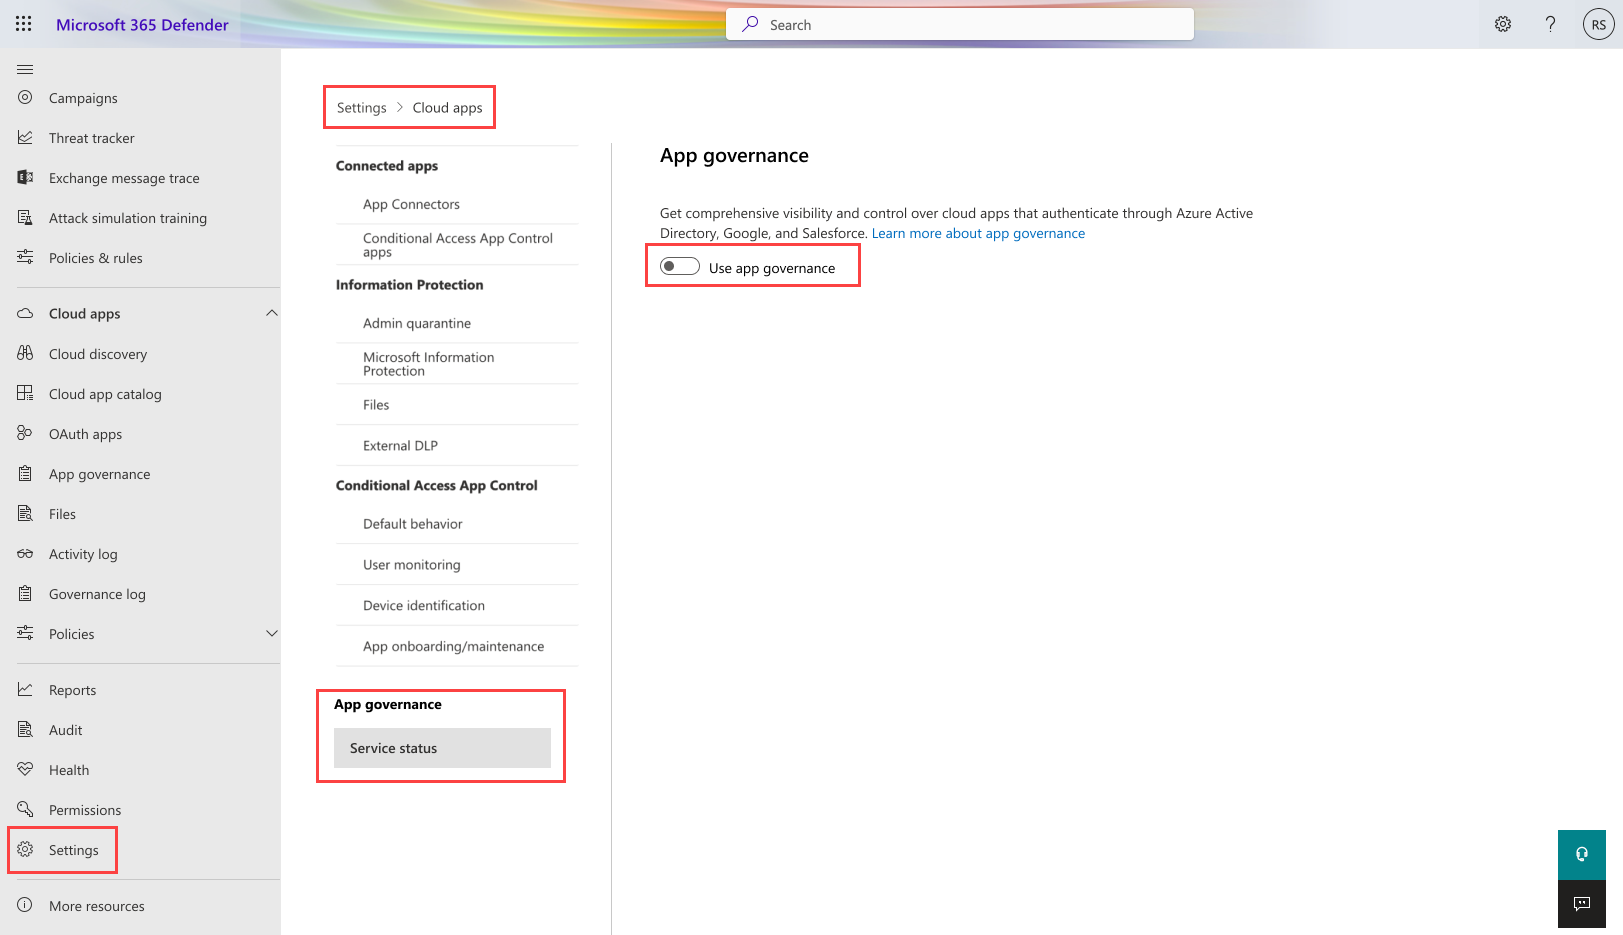 Screenshot of the App governance toggle in Microsoft 365 Defender.